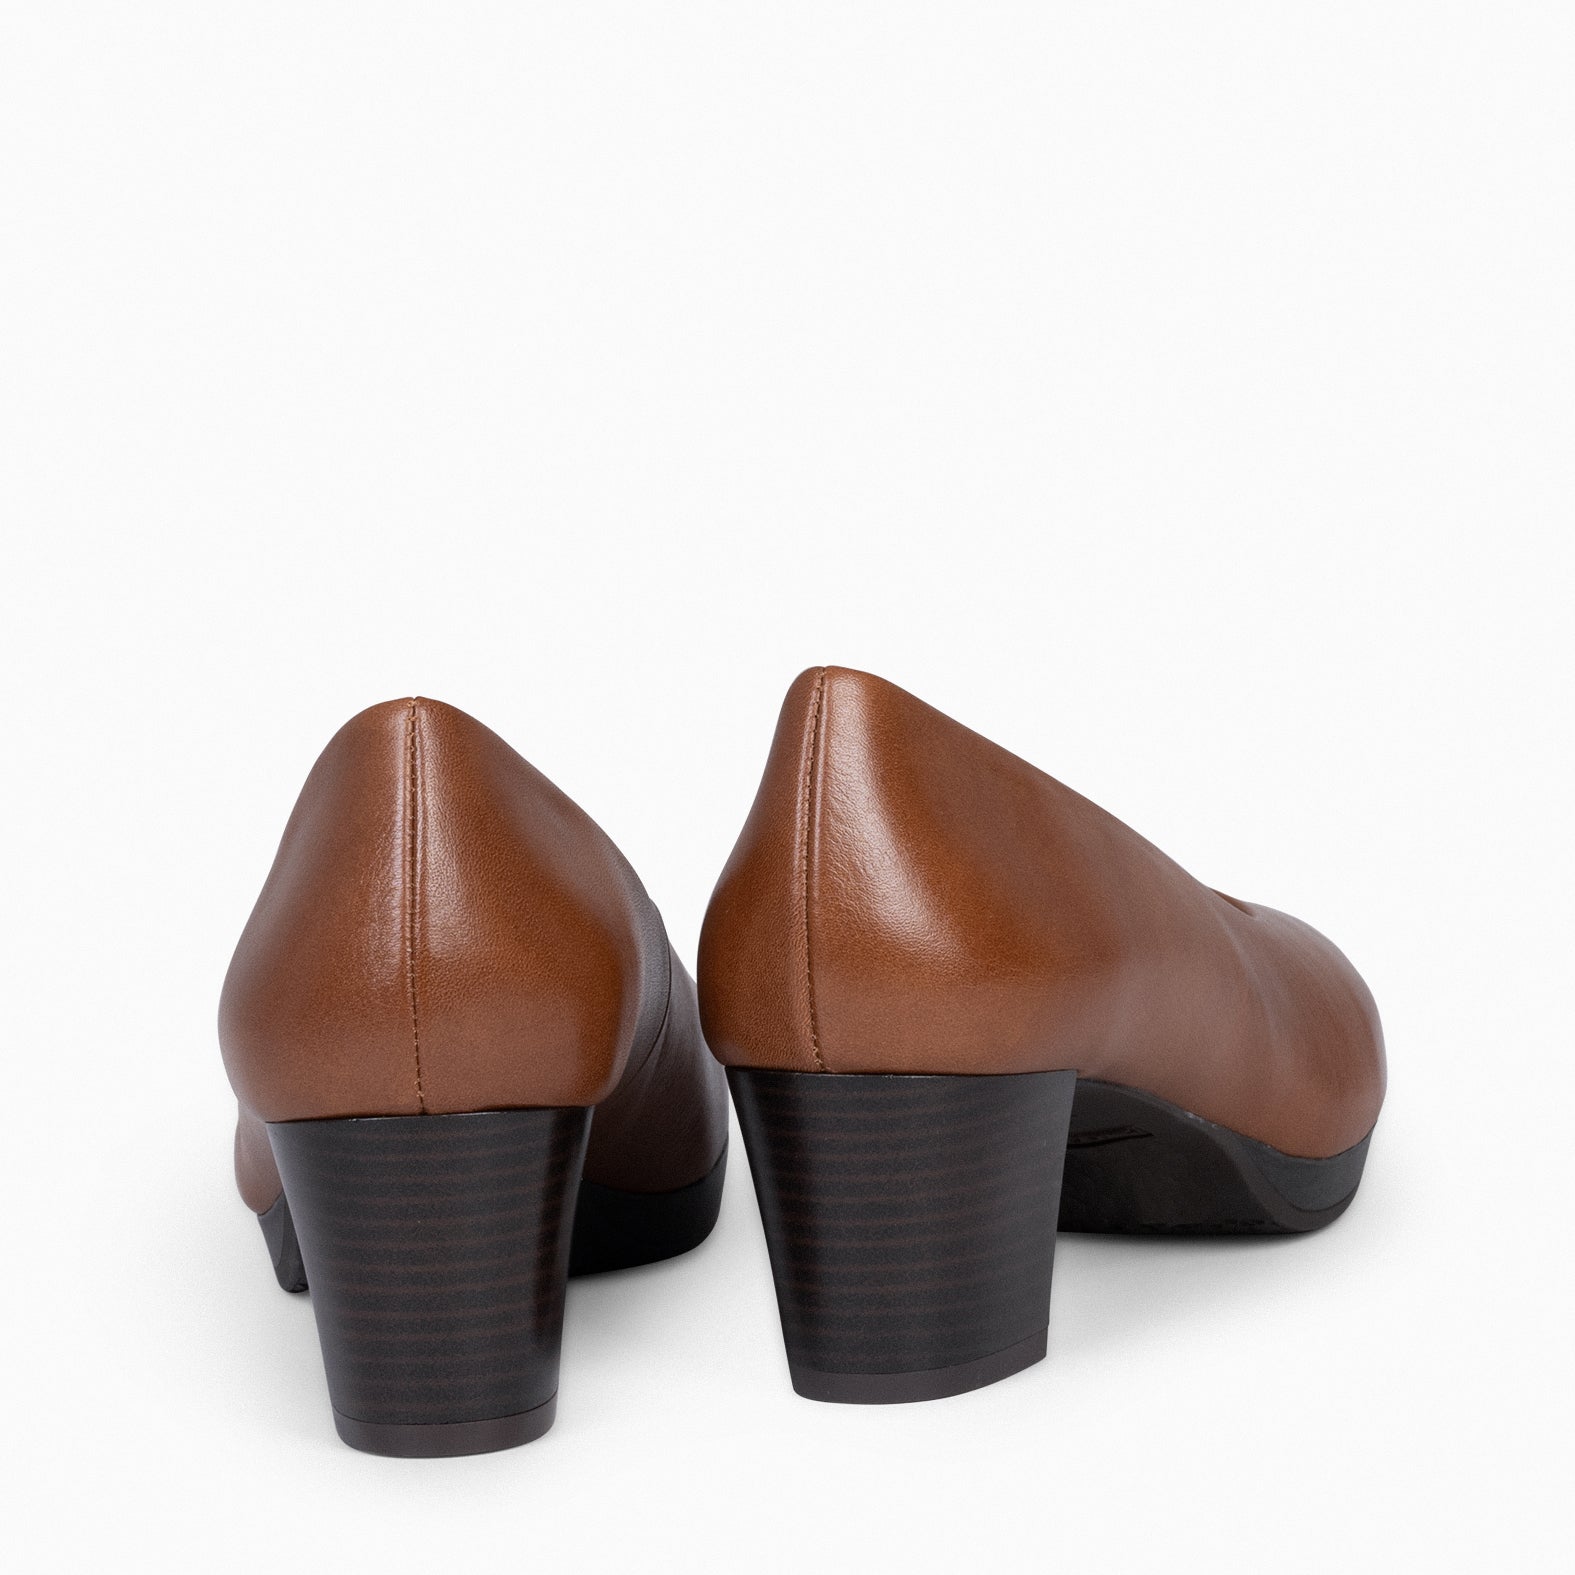 Leather heels Stuart Weitzman Camel size 7.5 US in Leather - 39190214